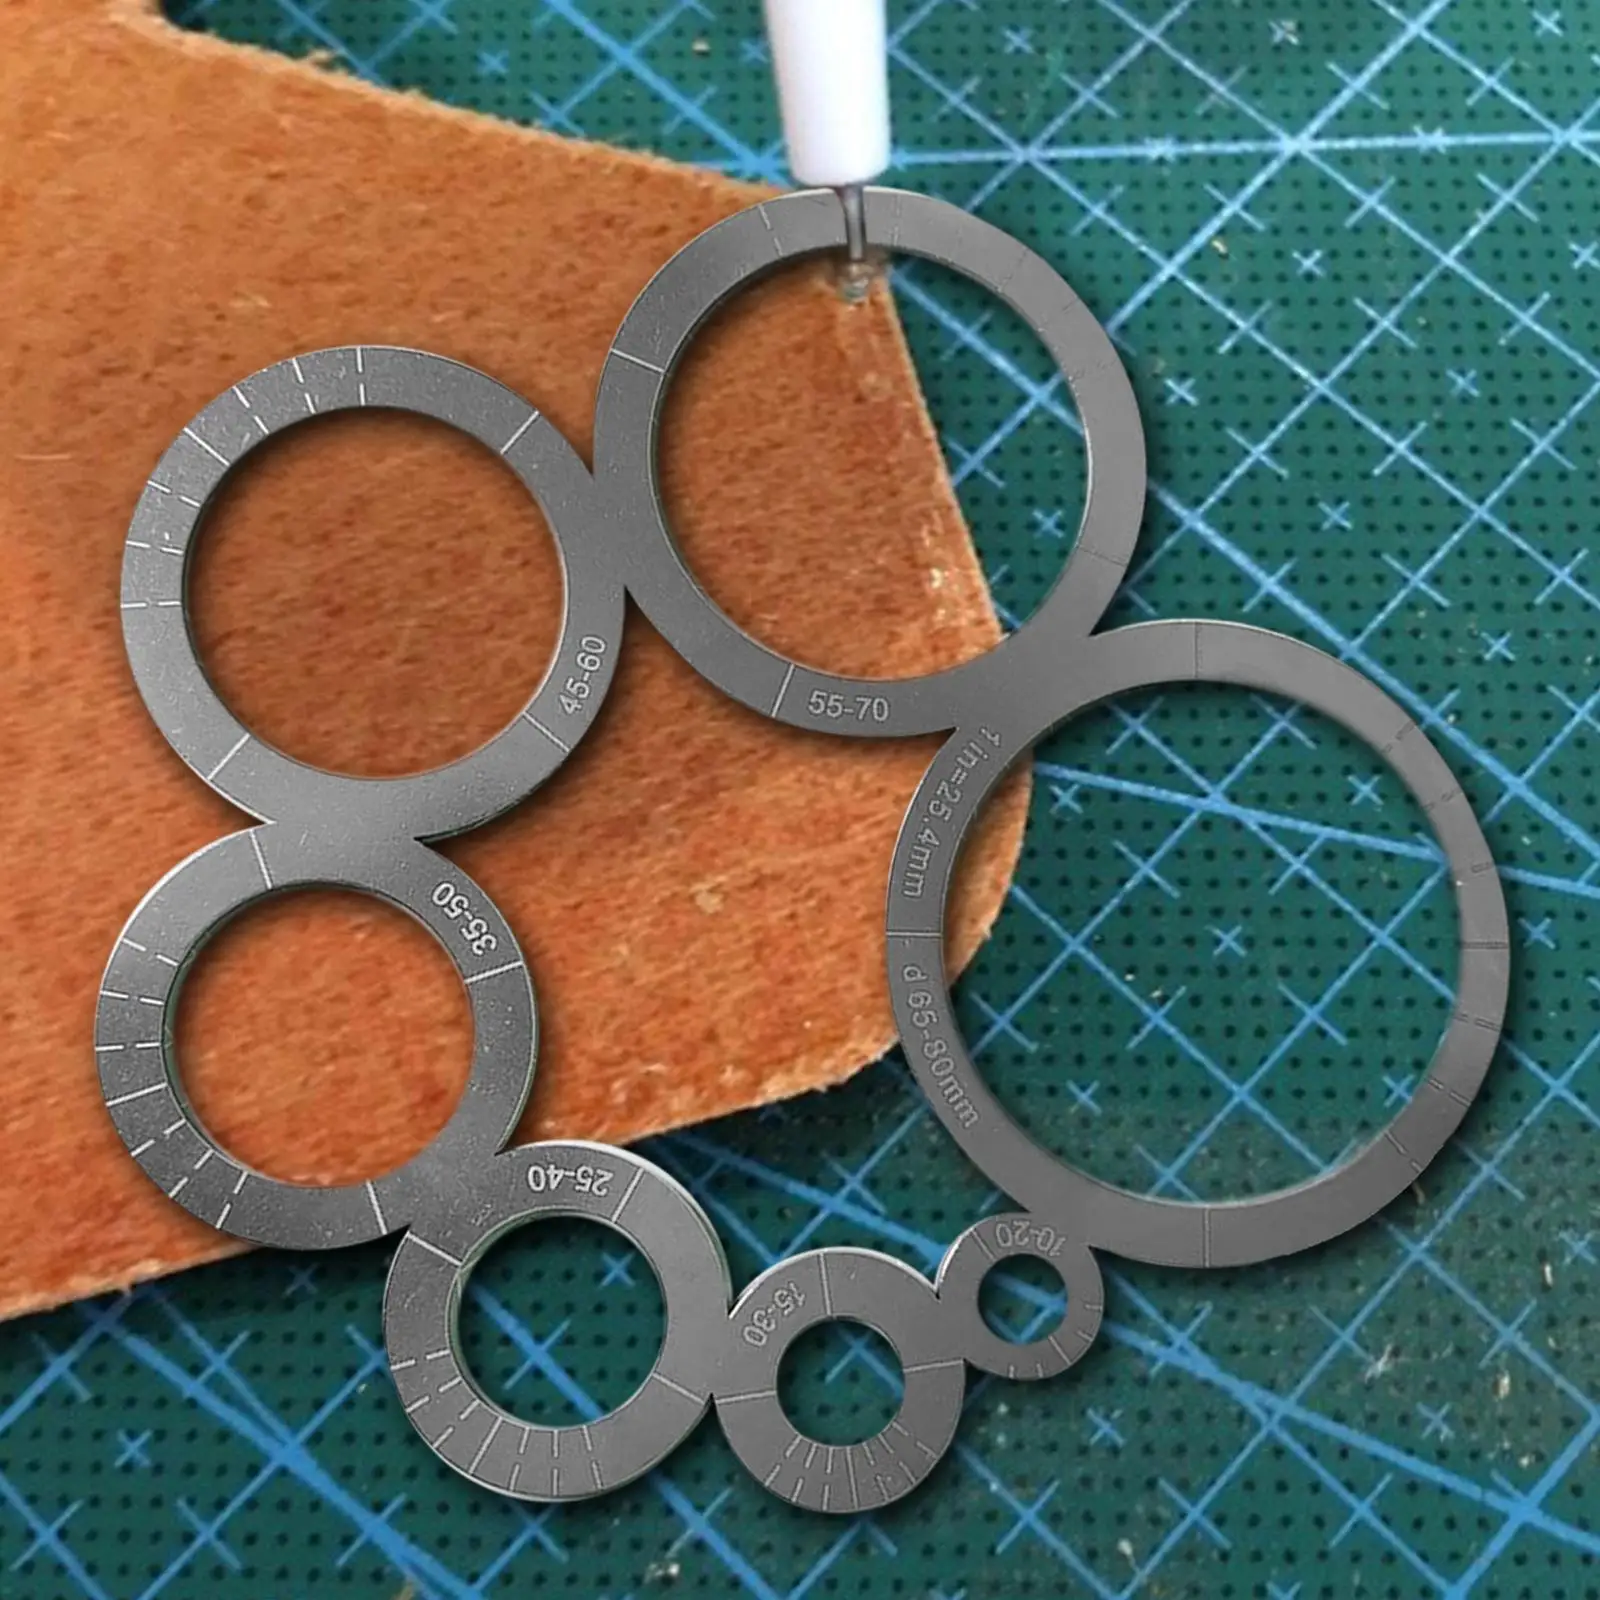 Leather Corner  Ruler Metal Circle Templates for Drawing DIY Supplies